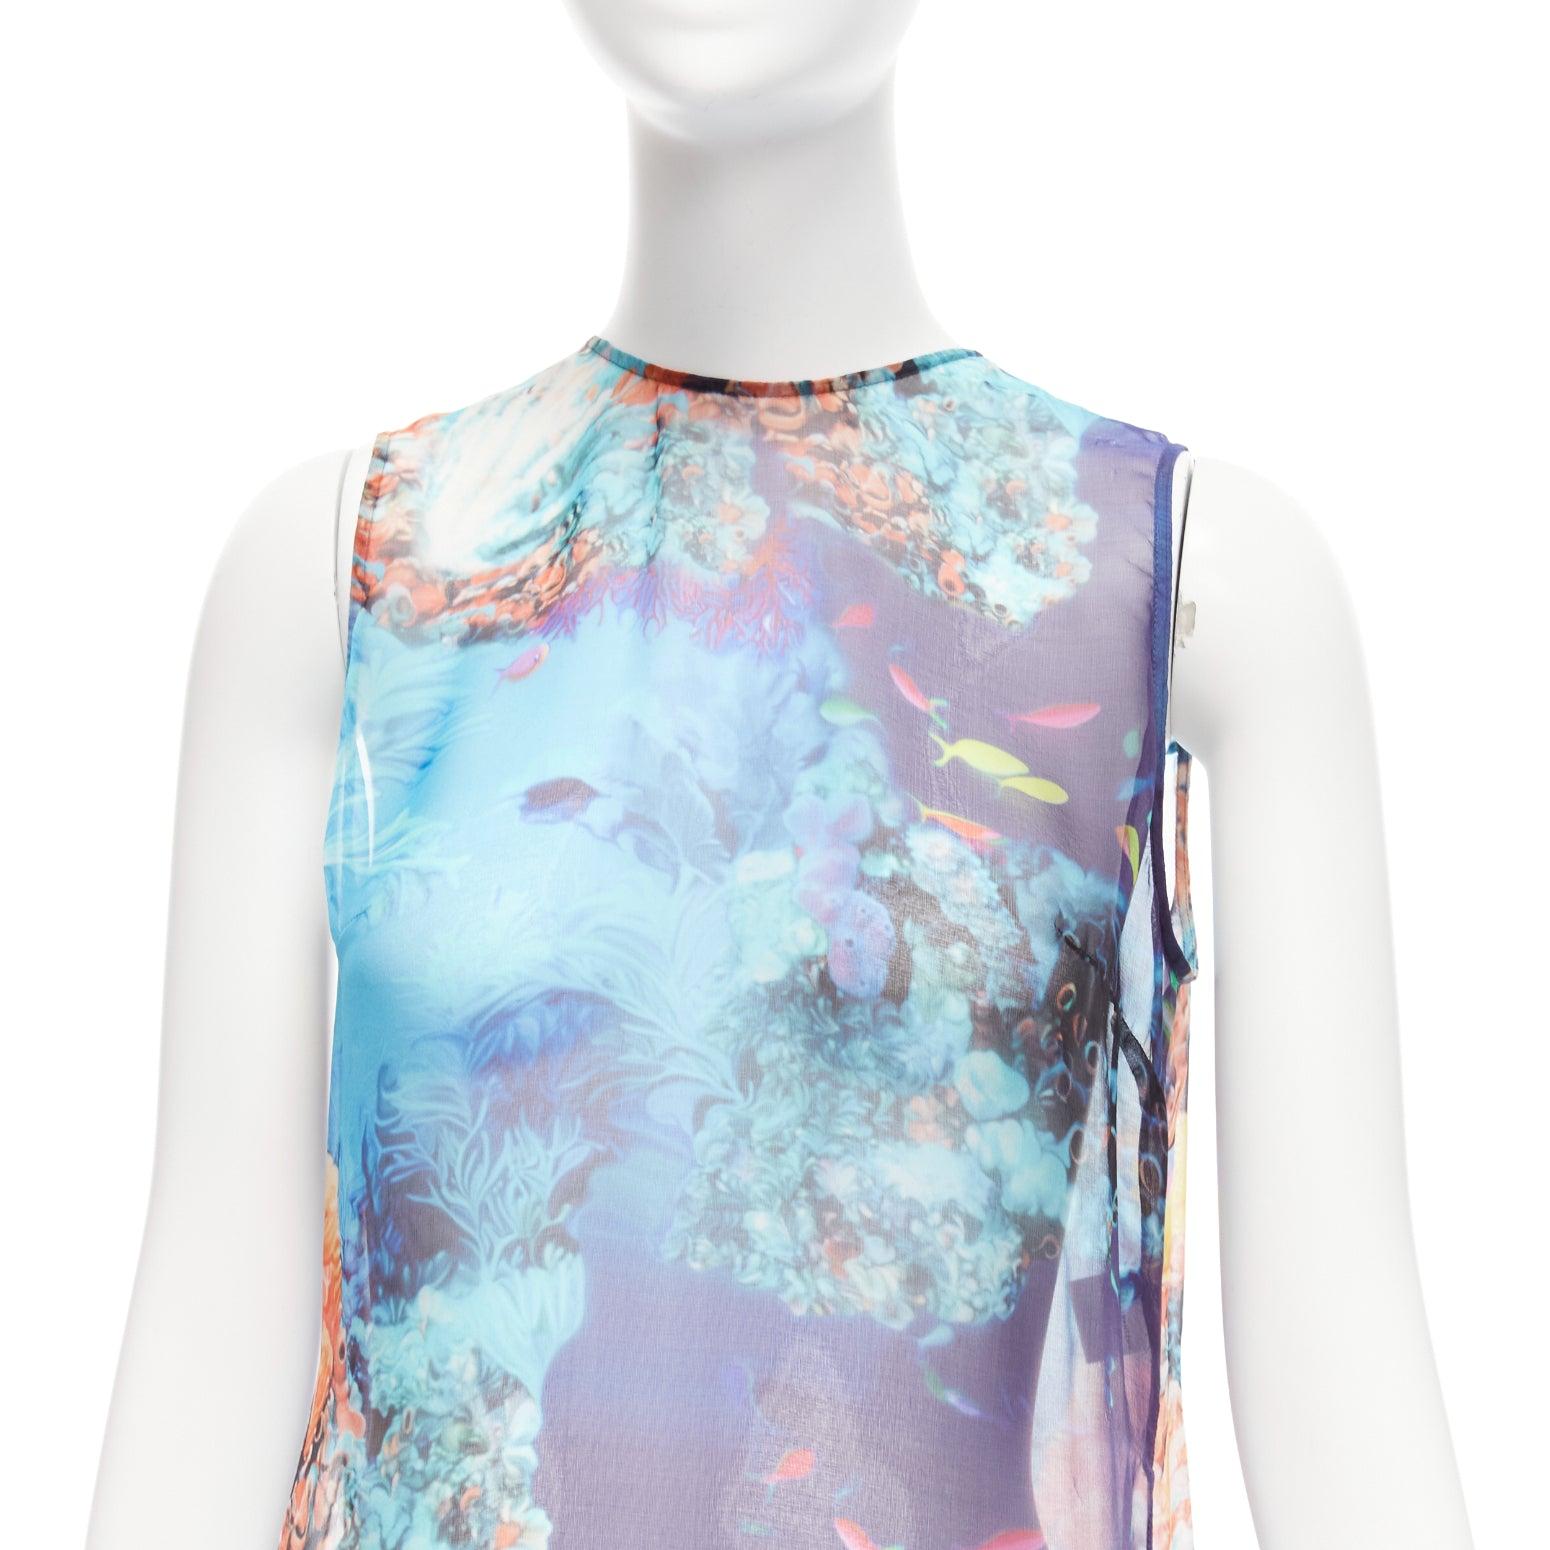 MARY KATRANTZOU 100% silk colourful aquatic print high low sheer top UK8 S For Sale 3